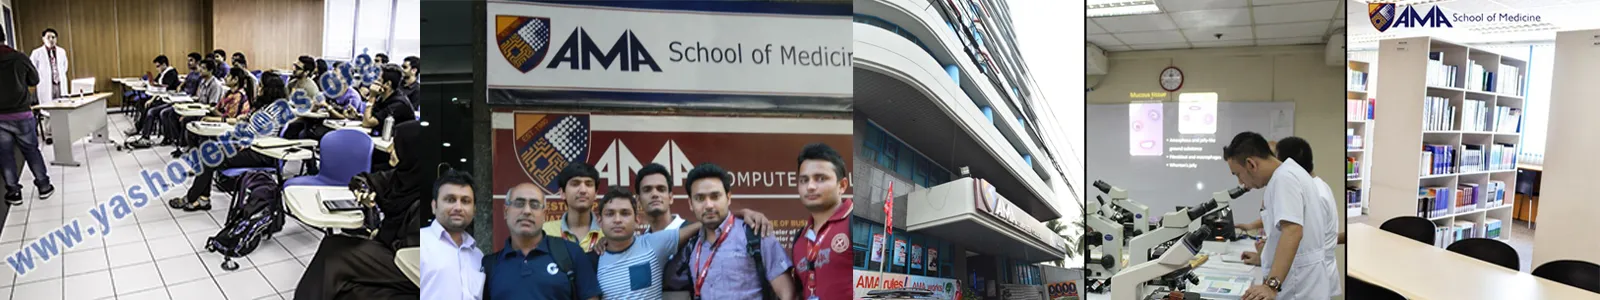 Ama School of Medicine